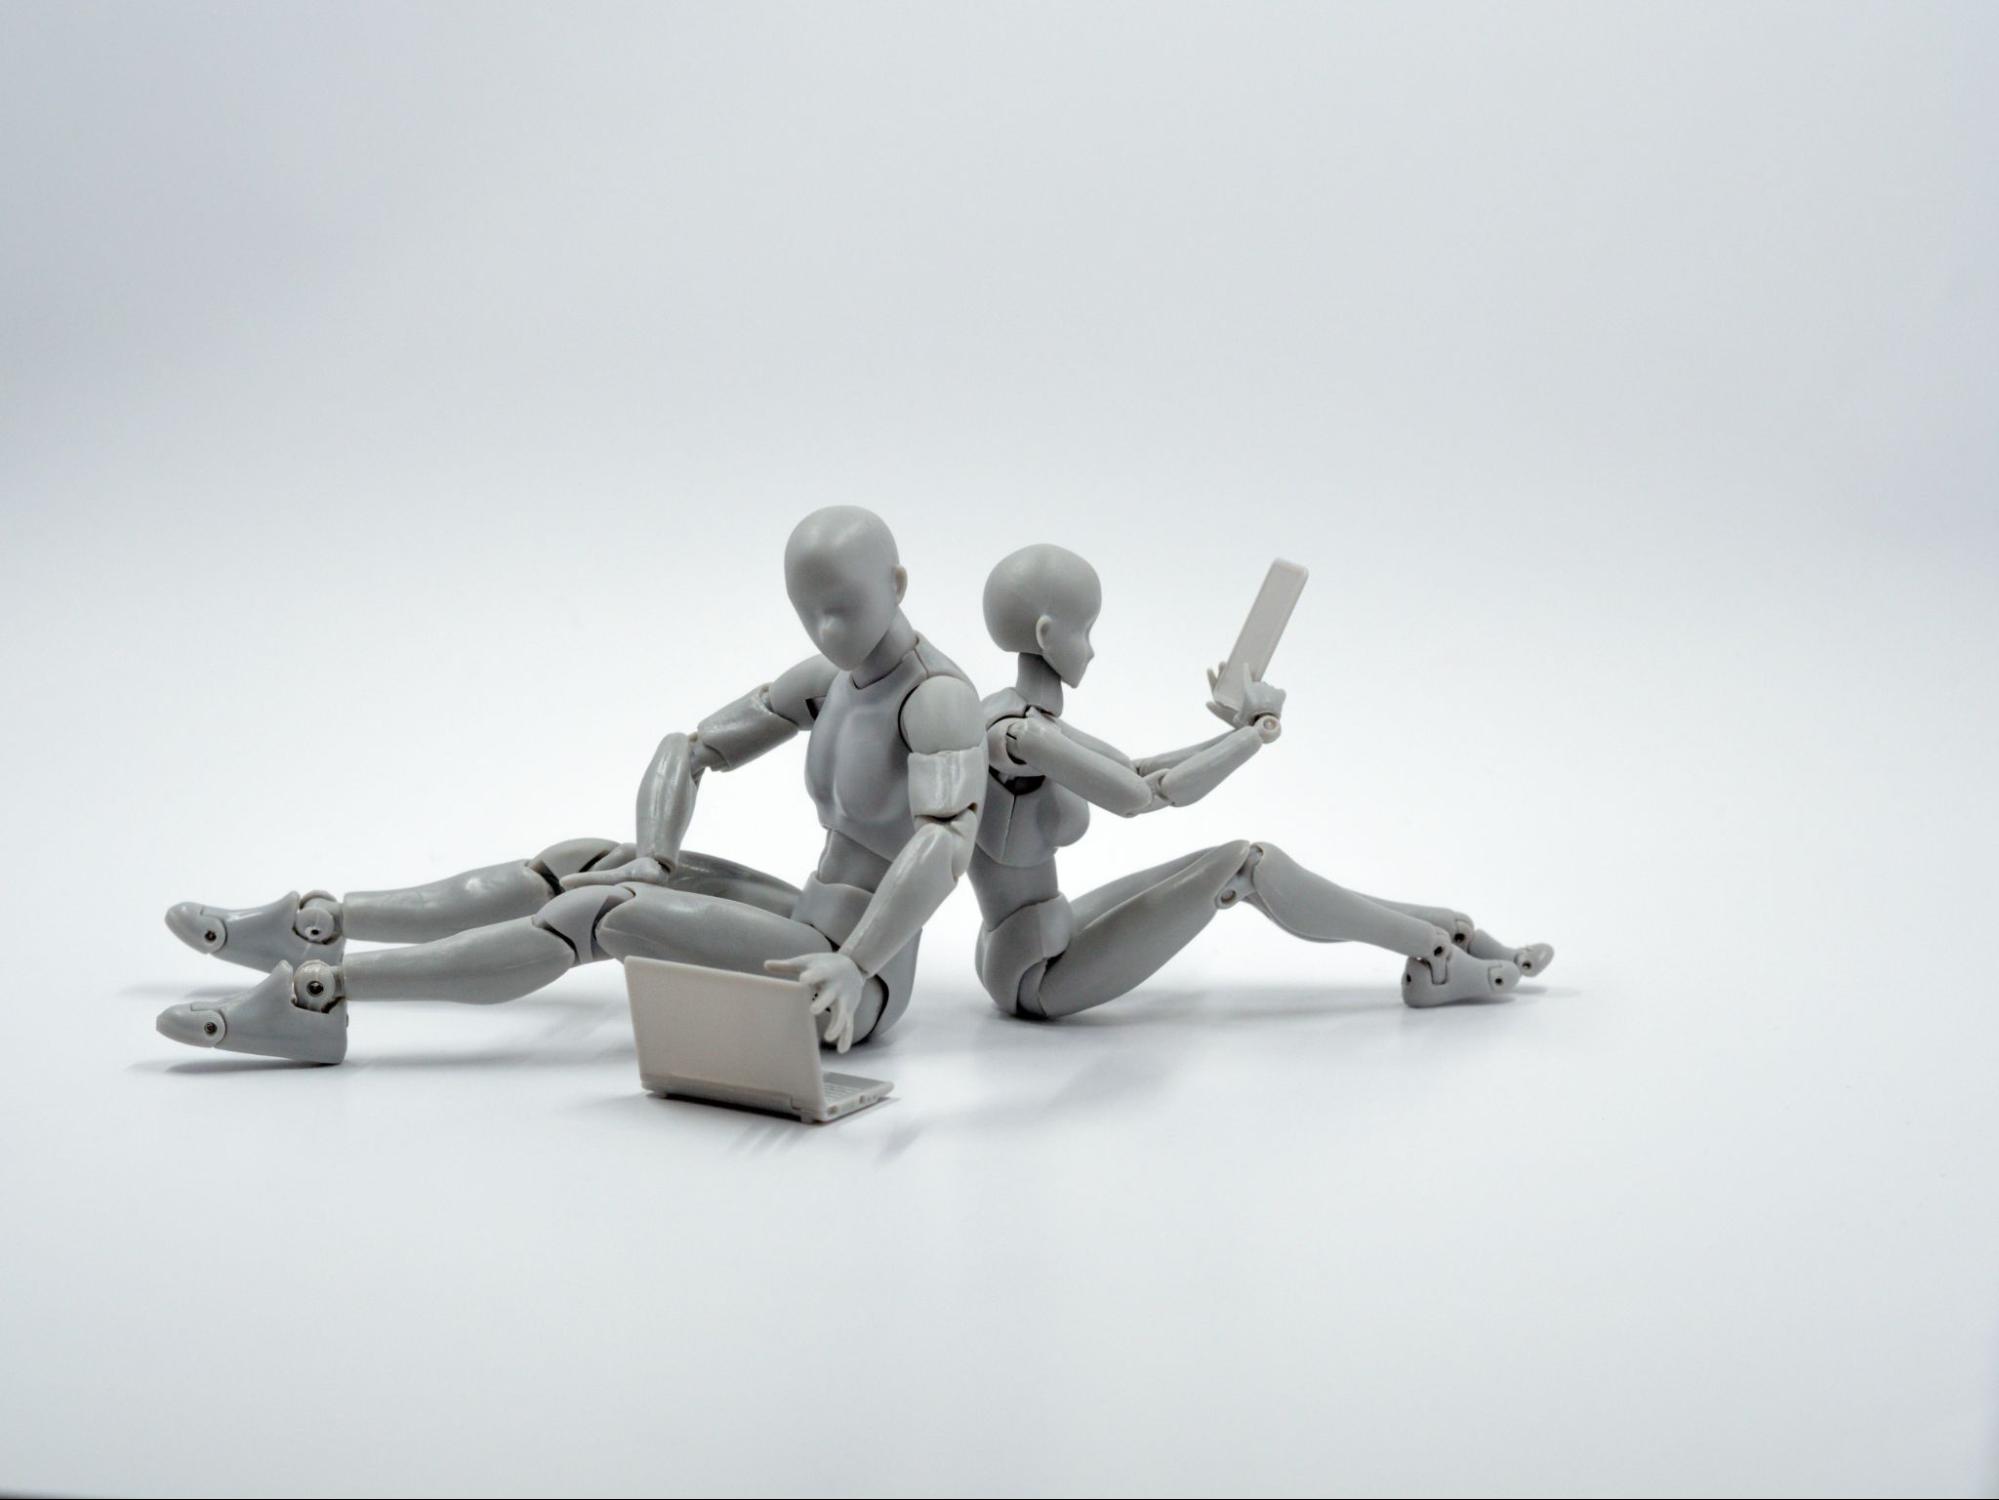 Two human-like figurines sitting on the floor